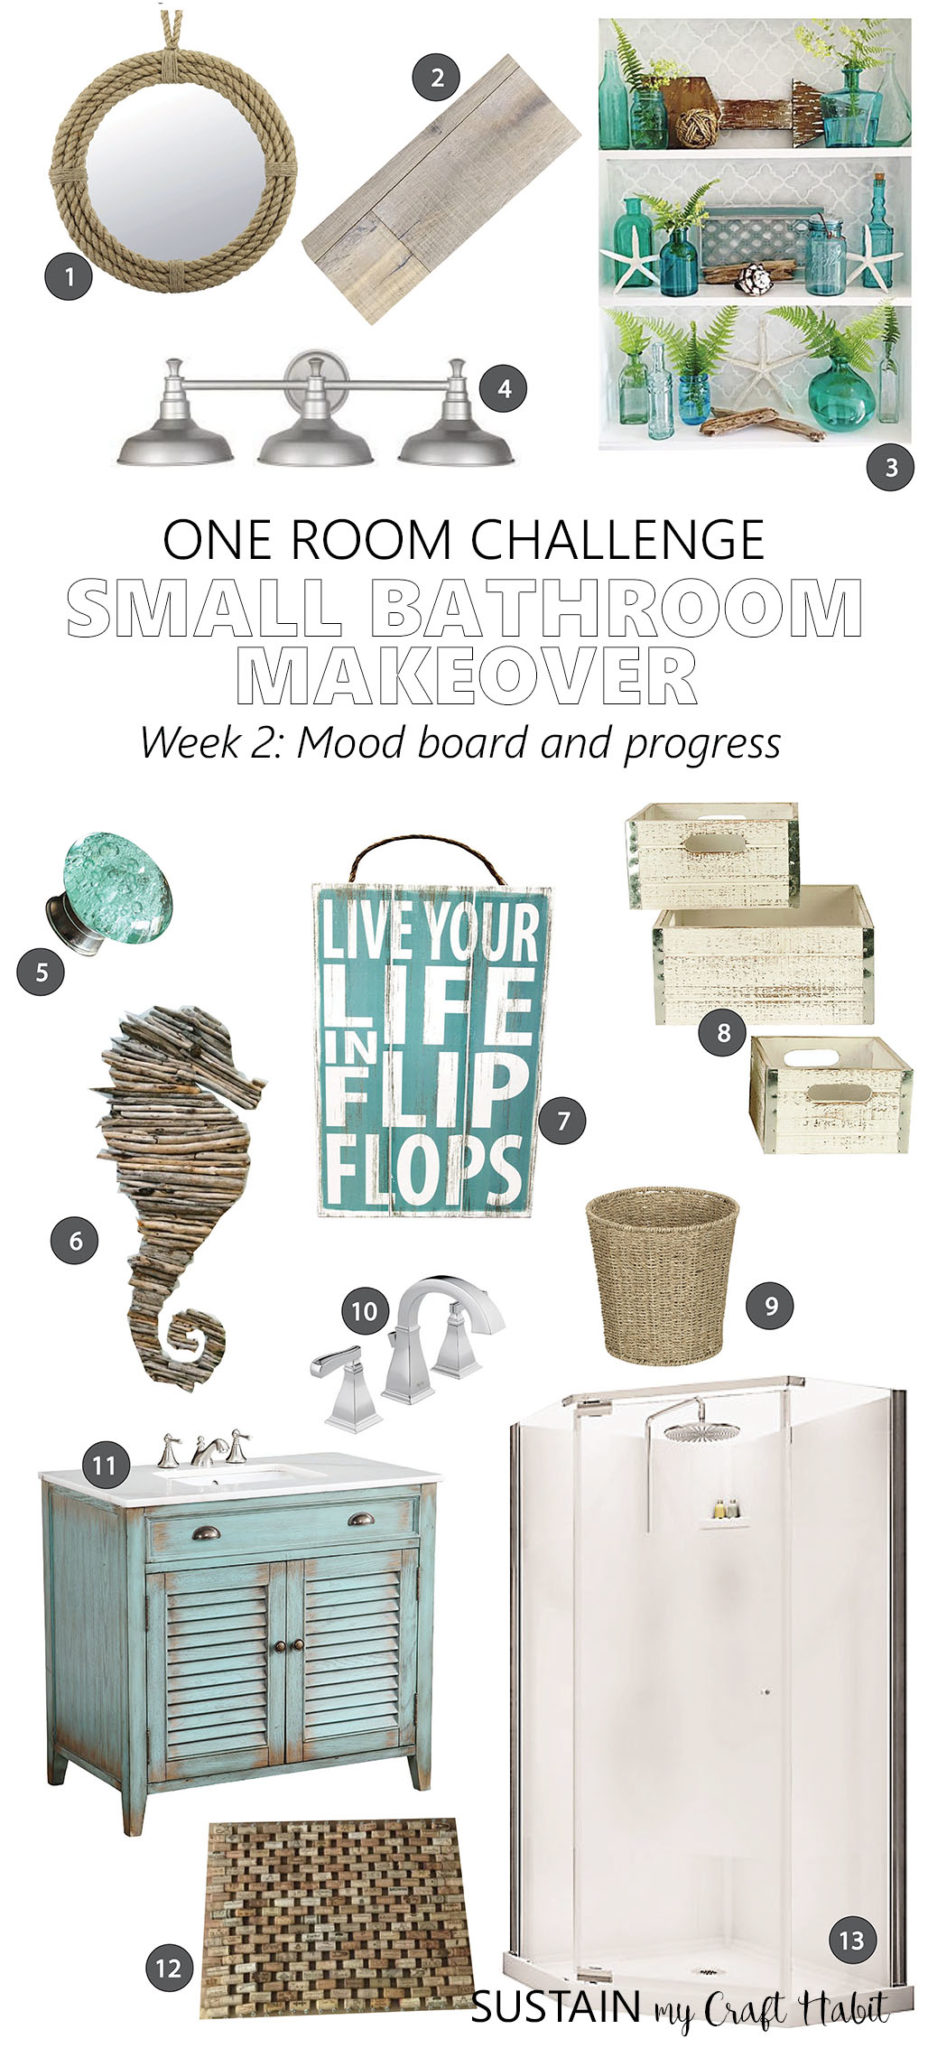 Touches of Teal coastal cottage mood board | Small bathroom remodel | Beach themed bathroom ideas mood board | One Room Challenge bathroom